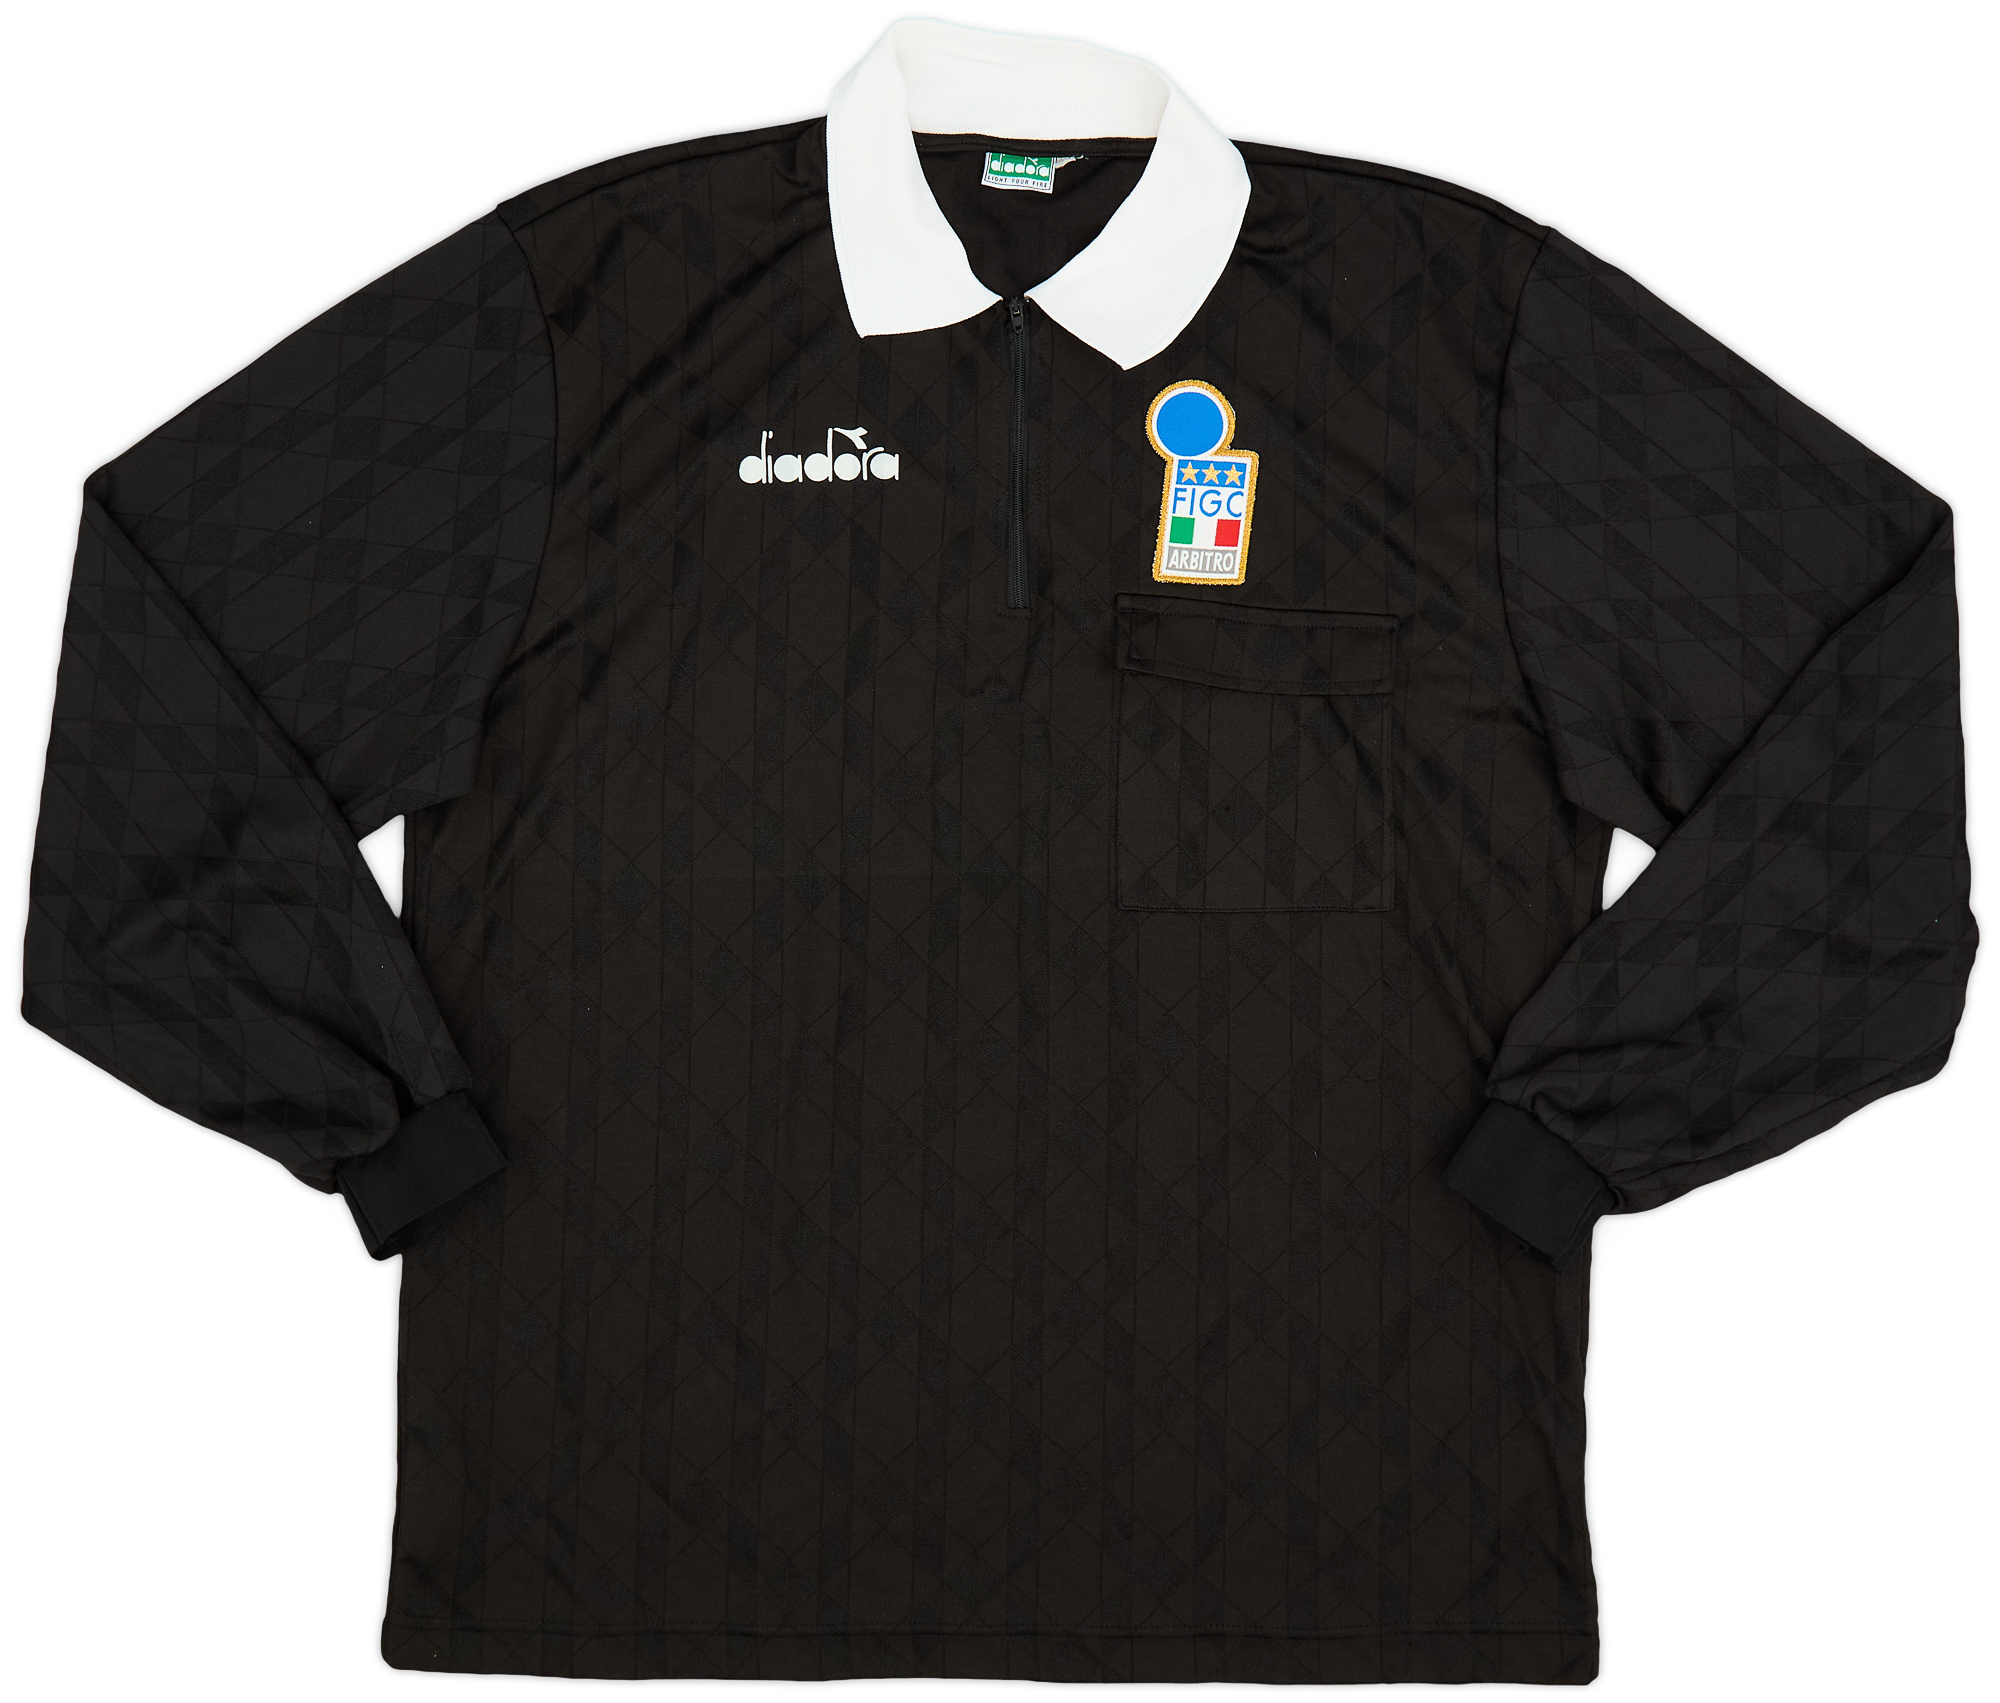 1990s Italy FIGC Diadora Referee Shirt - 9/10 - ()